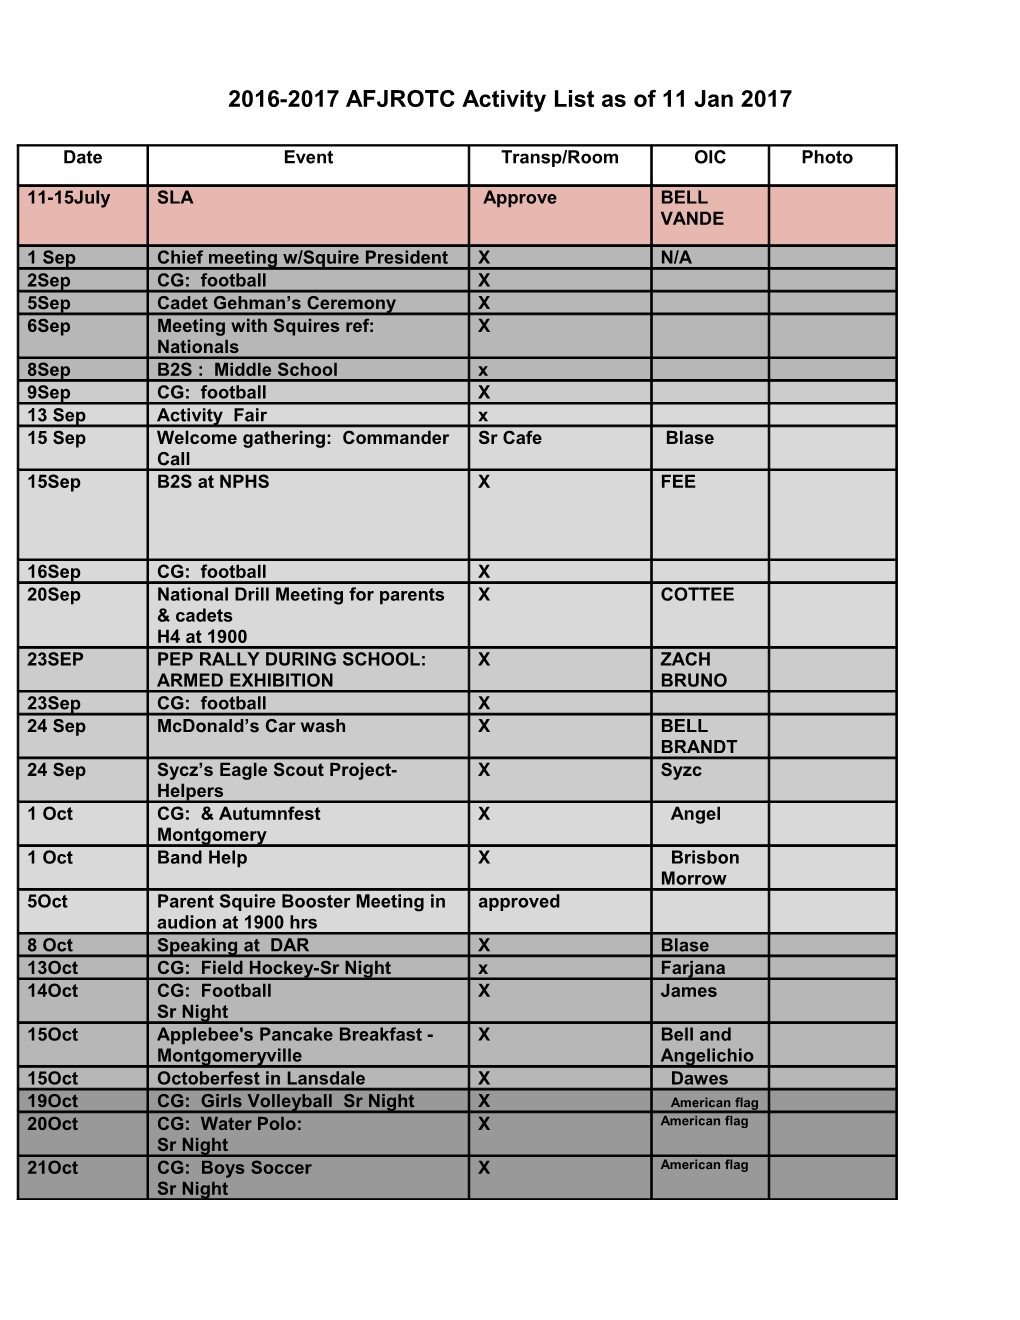 2016-2017 AFJROTC Activity List As of 11 Jan 2017